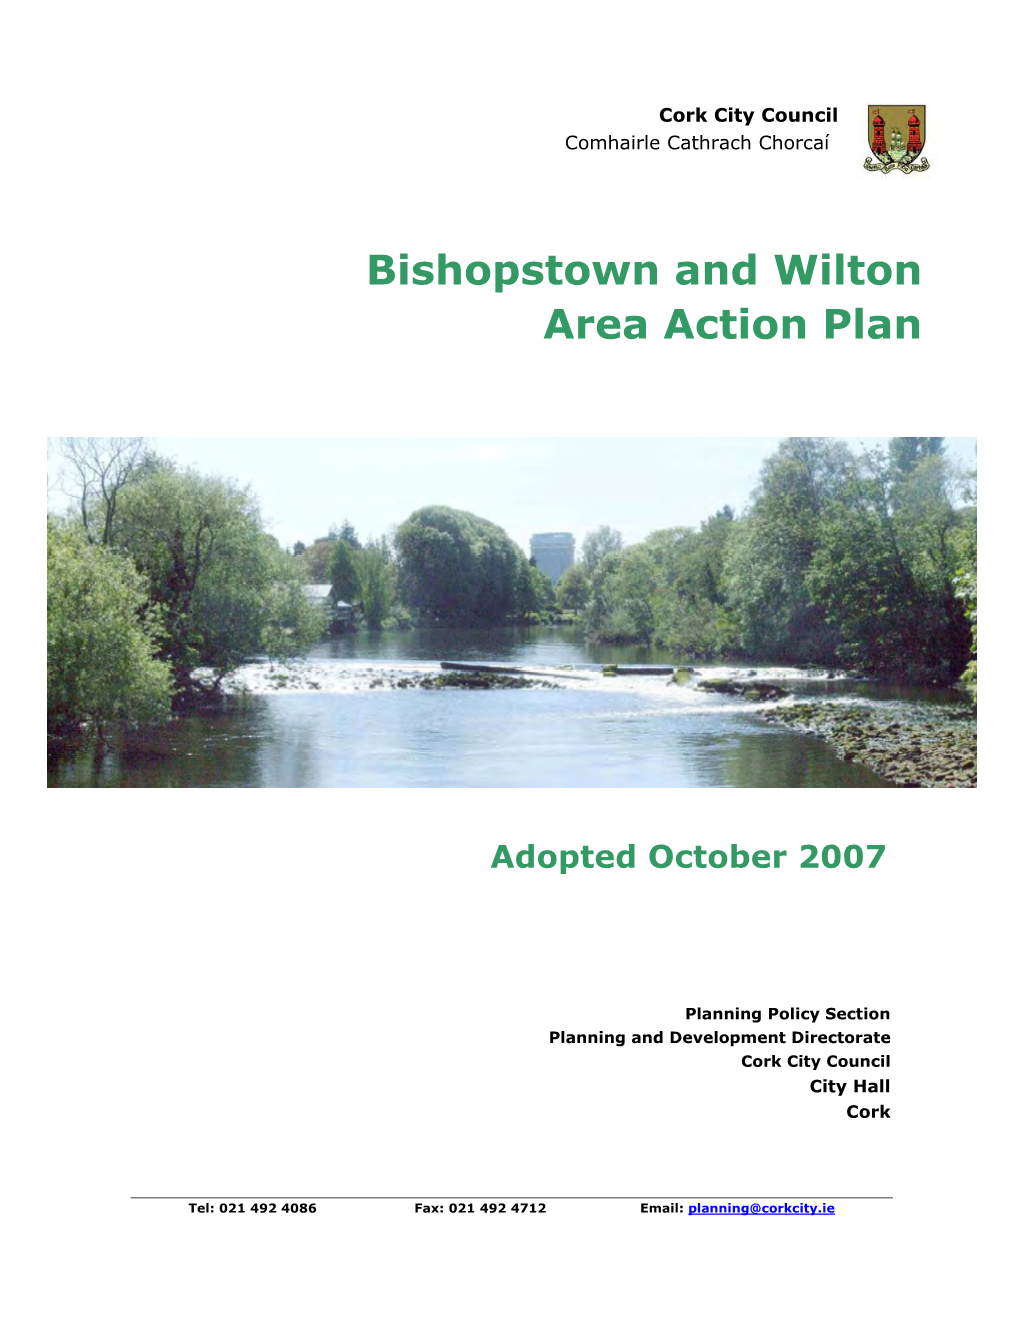 Bishopstown and Wilton Area Action Plan